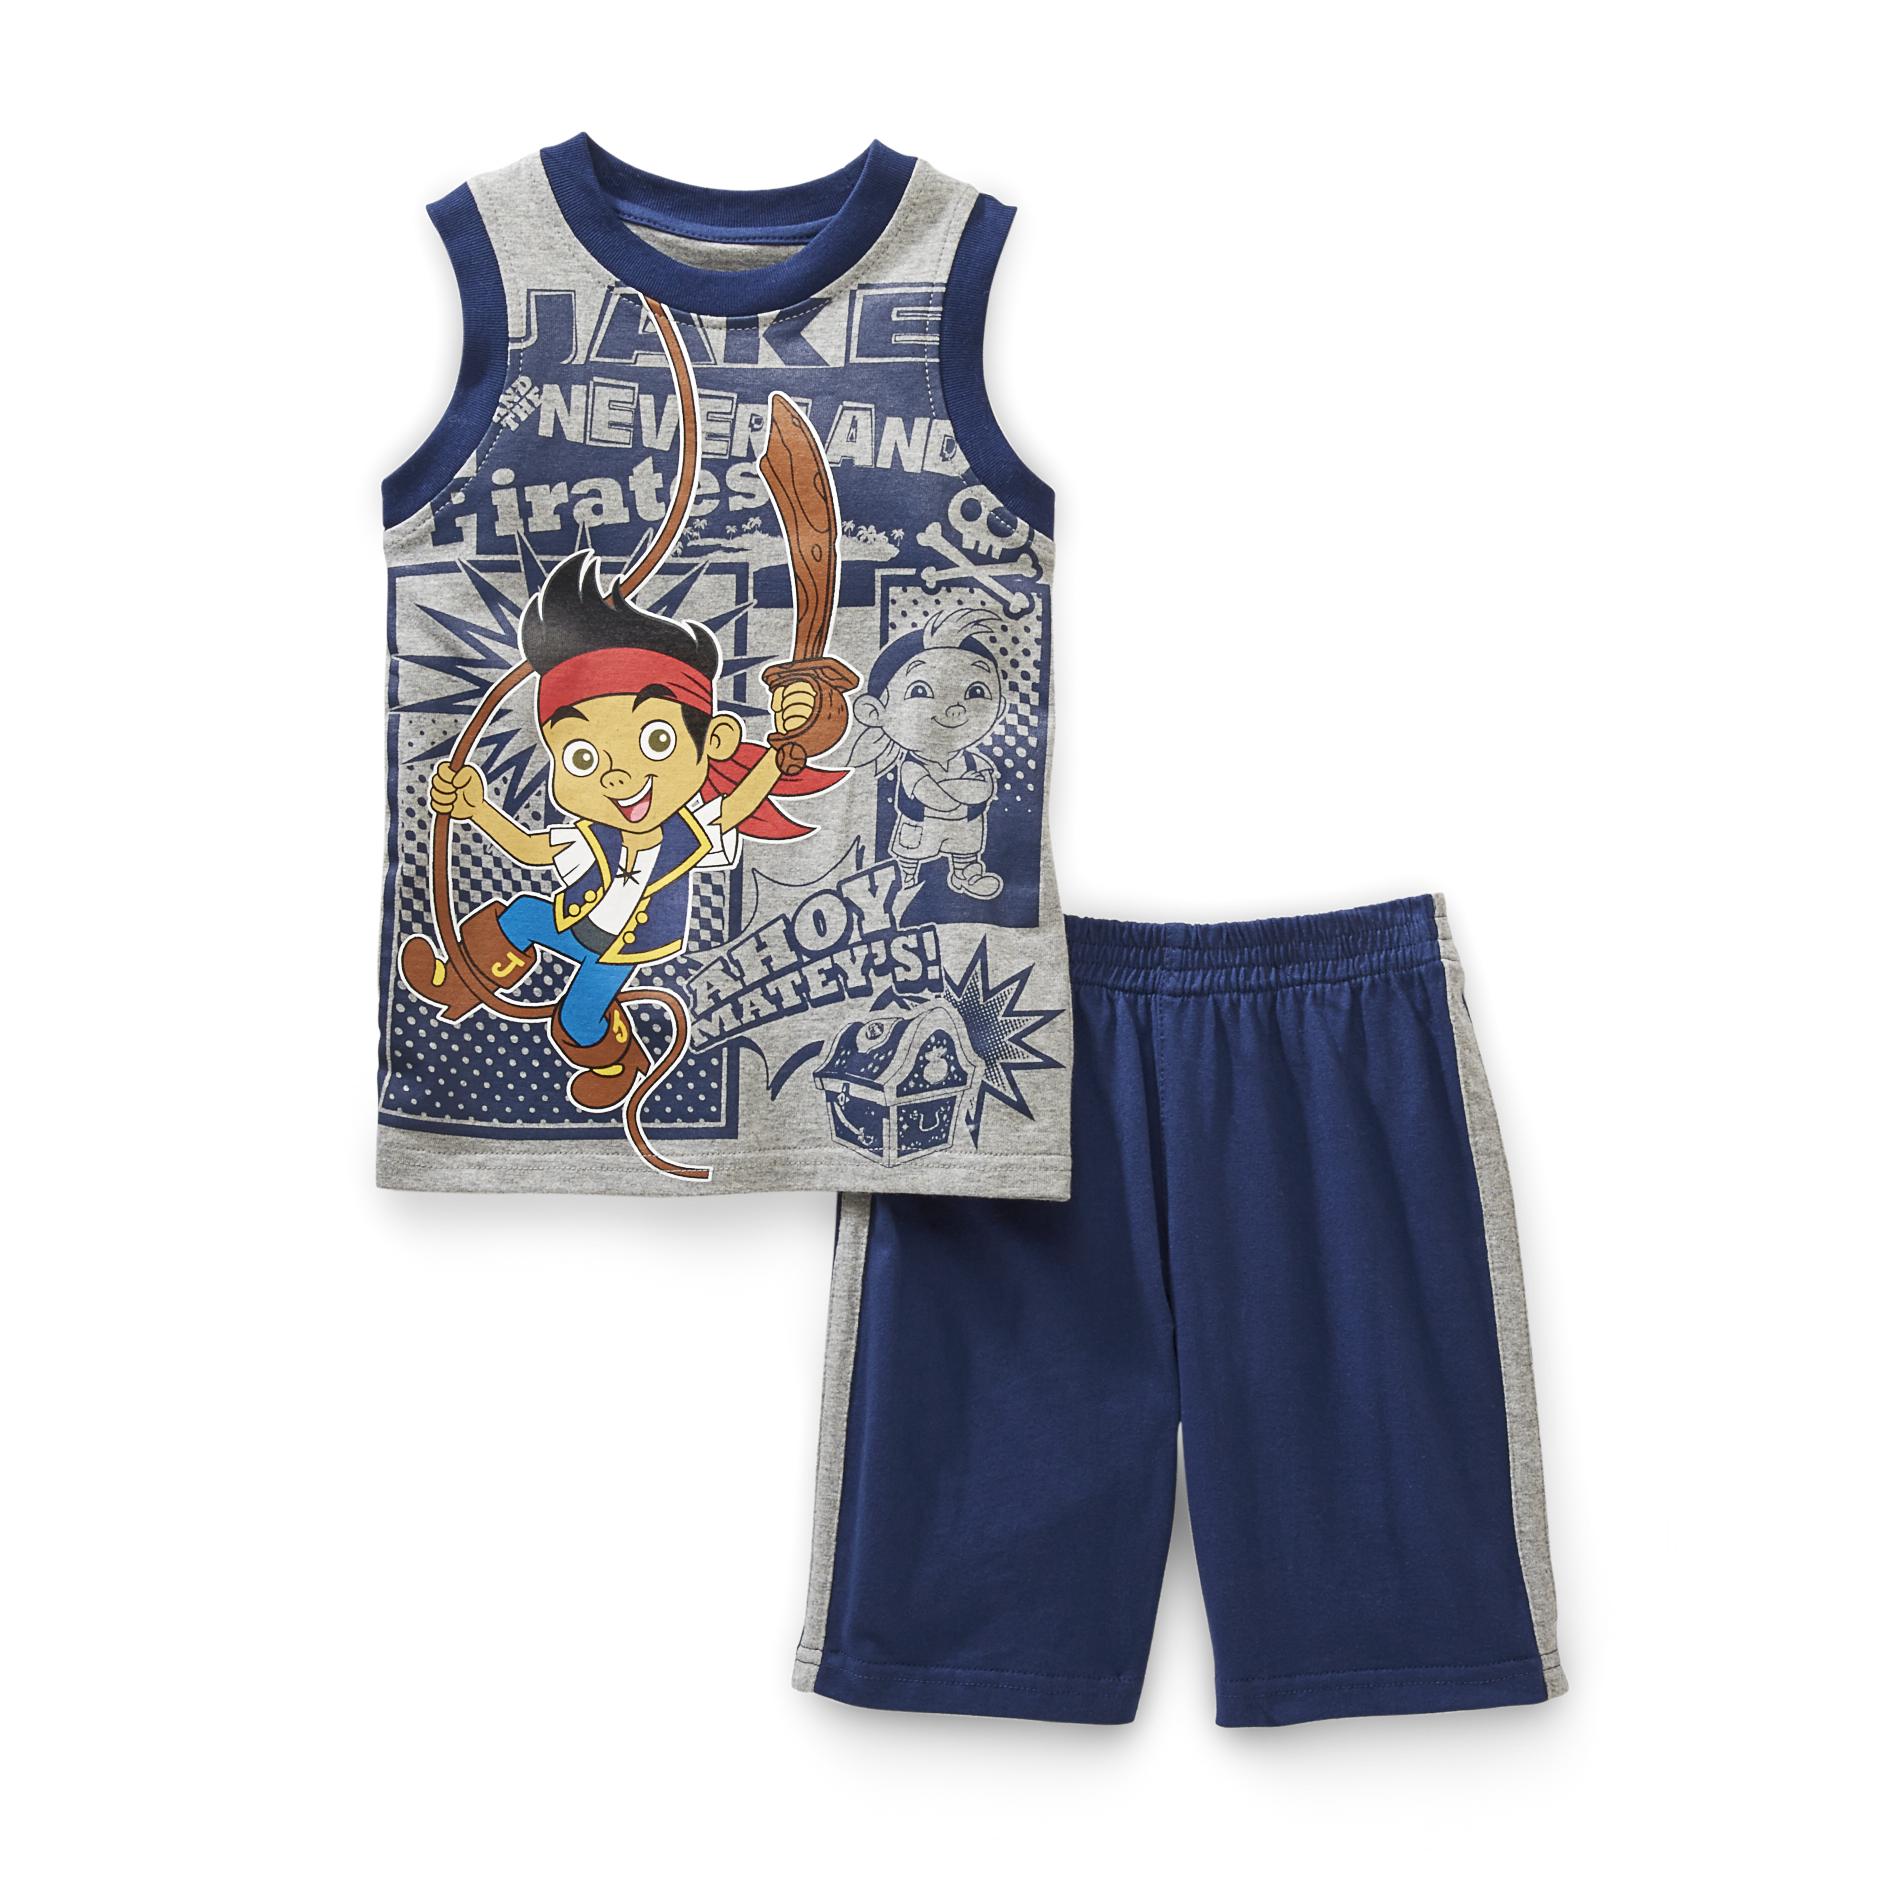 Disney Toddler Boy's Sleeveless Shirt & Shorts - Jake & the Never Land Pirate